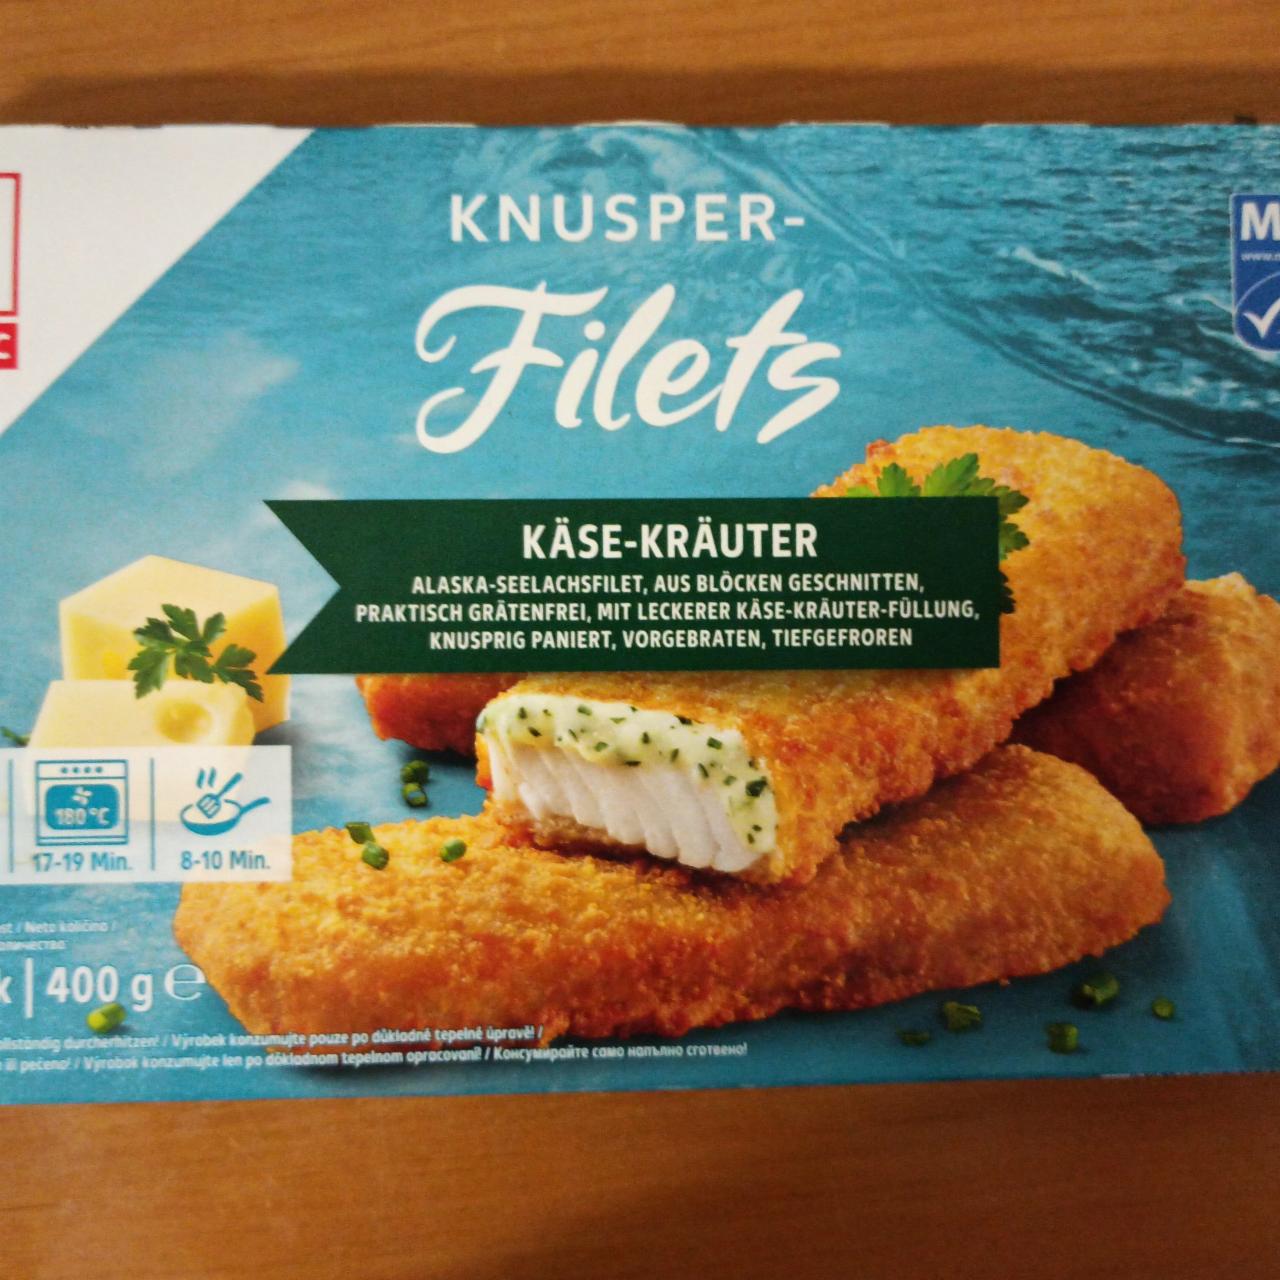 Фото - Филе трески в панировке Knusper Filets Käse-Kräuter K-Classic